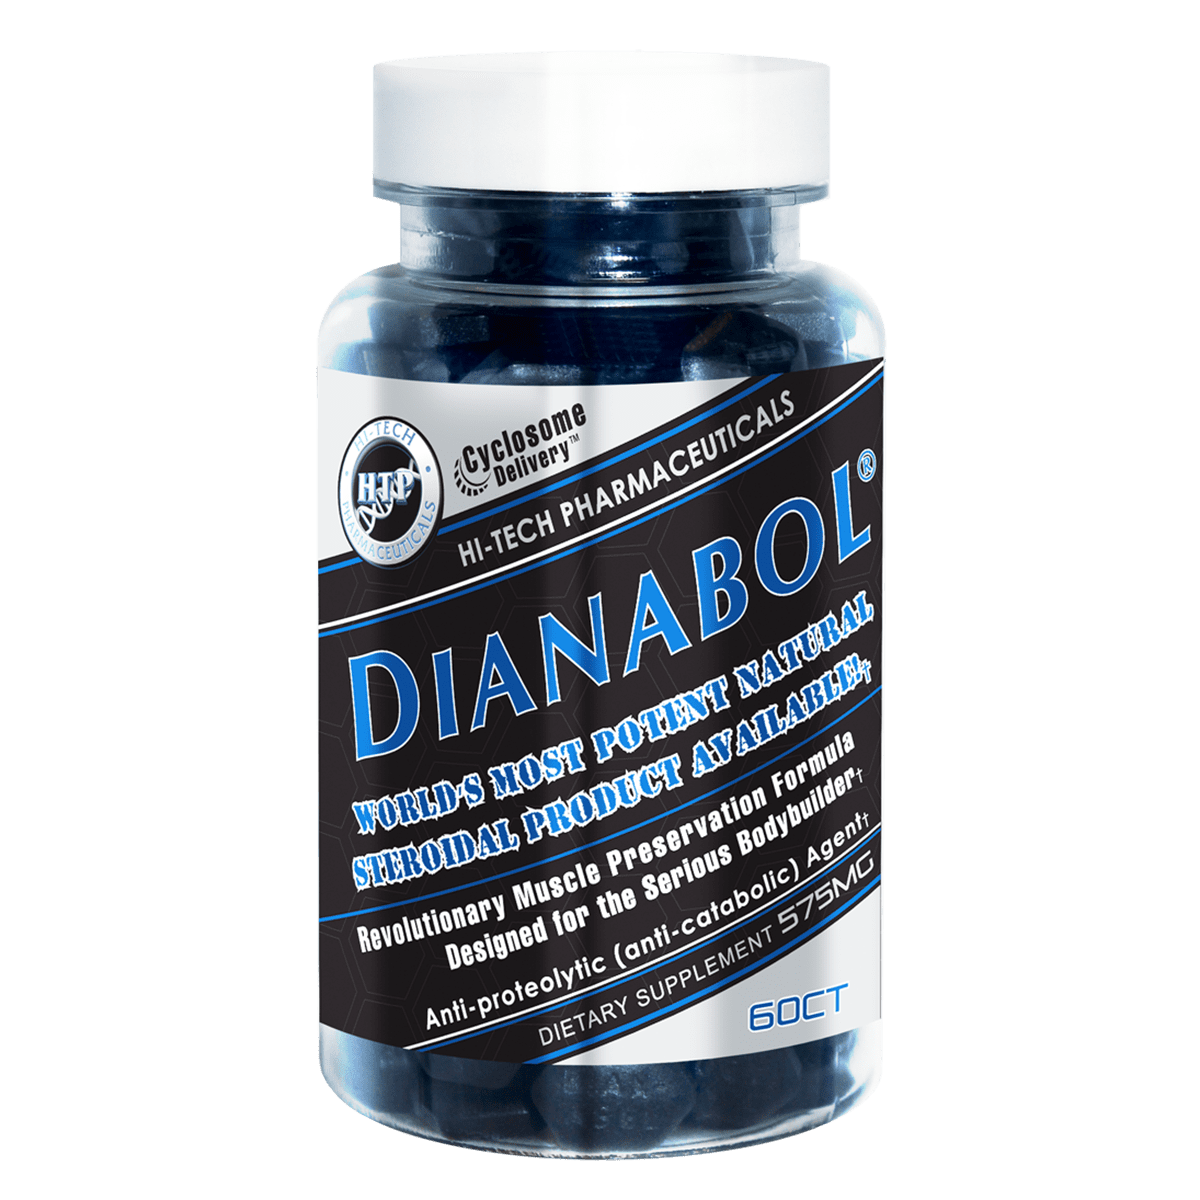 Hi Tech Dianabol 60 Tablets Testosterone Muscle Builder 9217